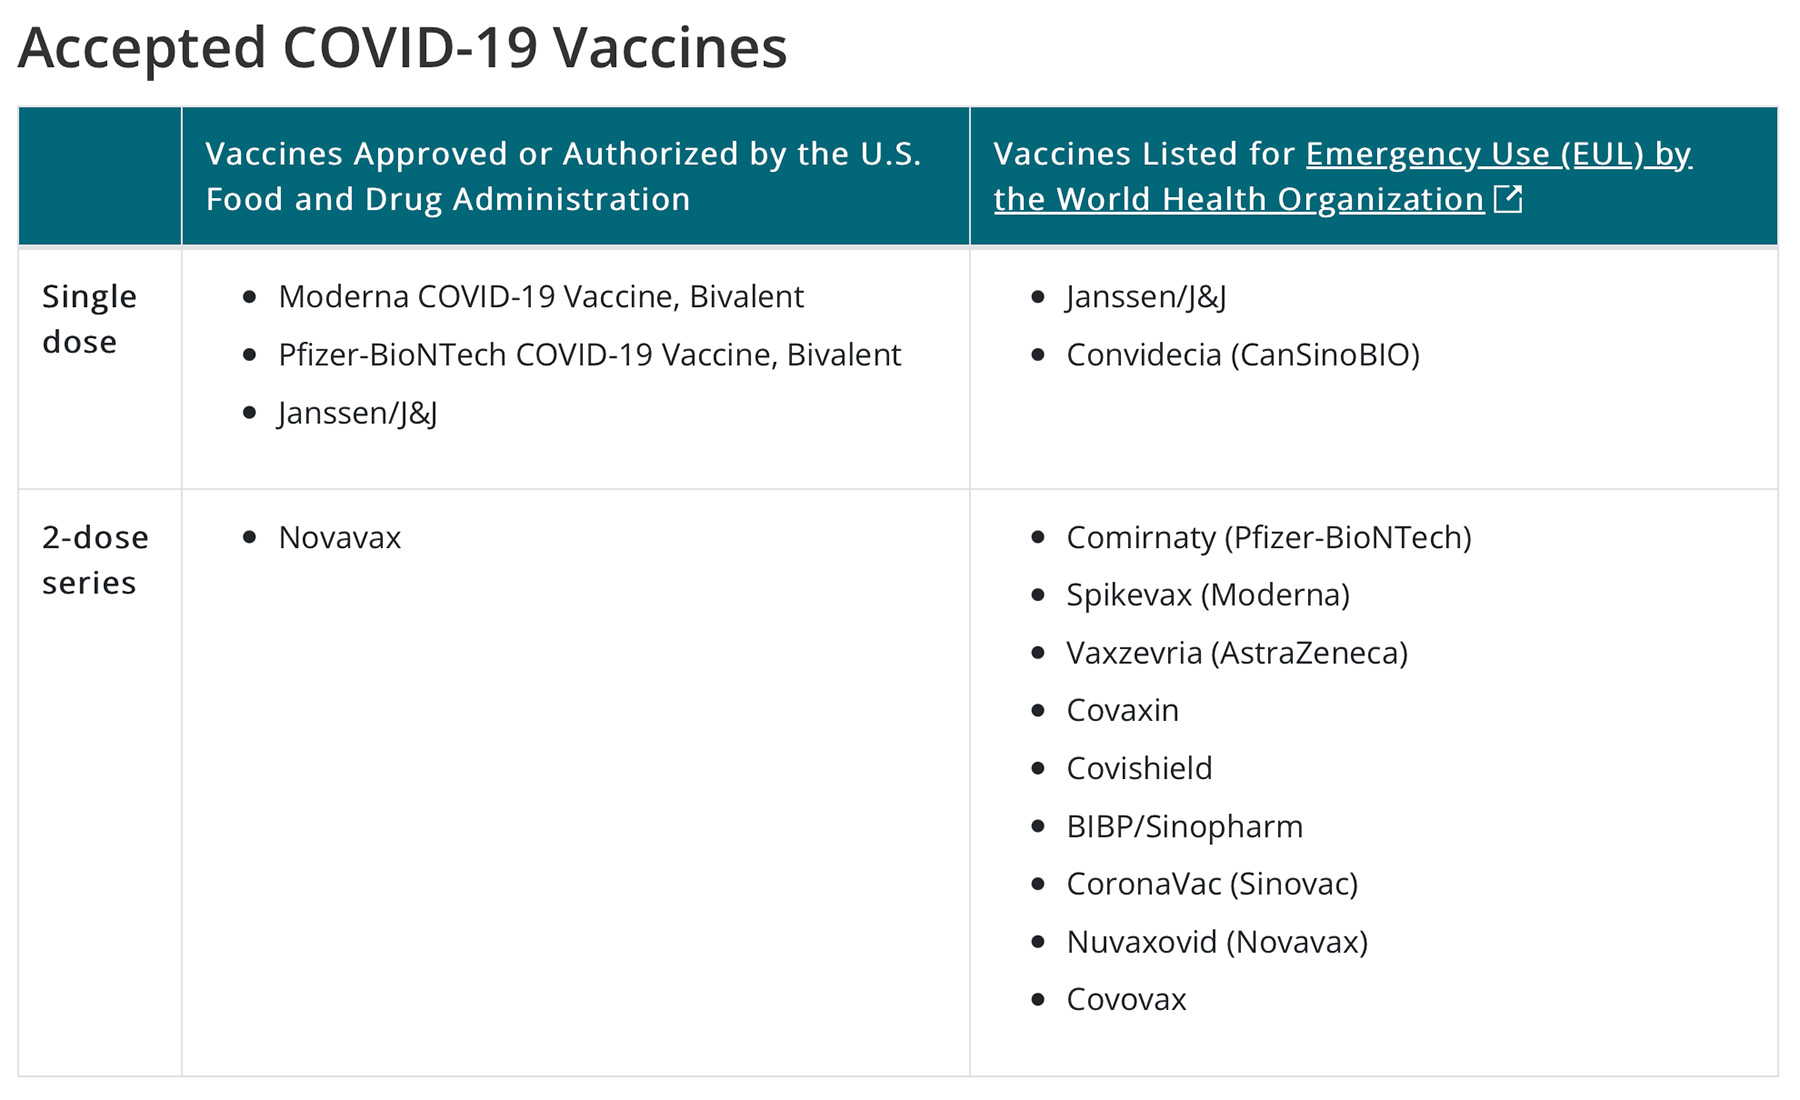 us travel vaccine requirements 2022